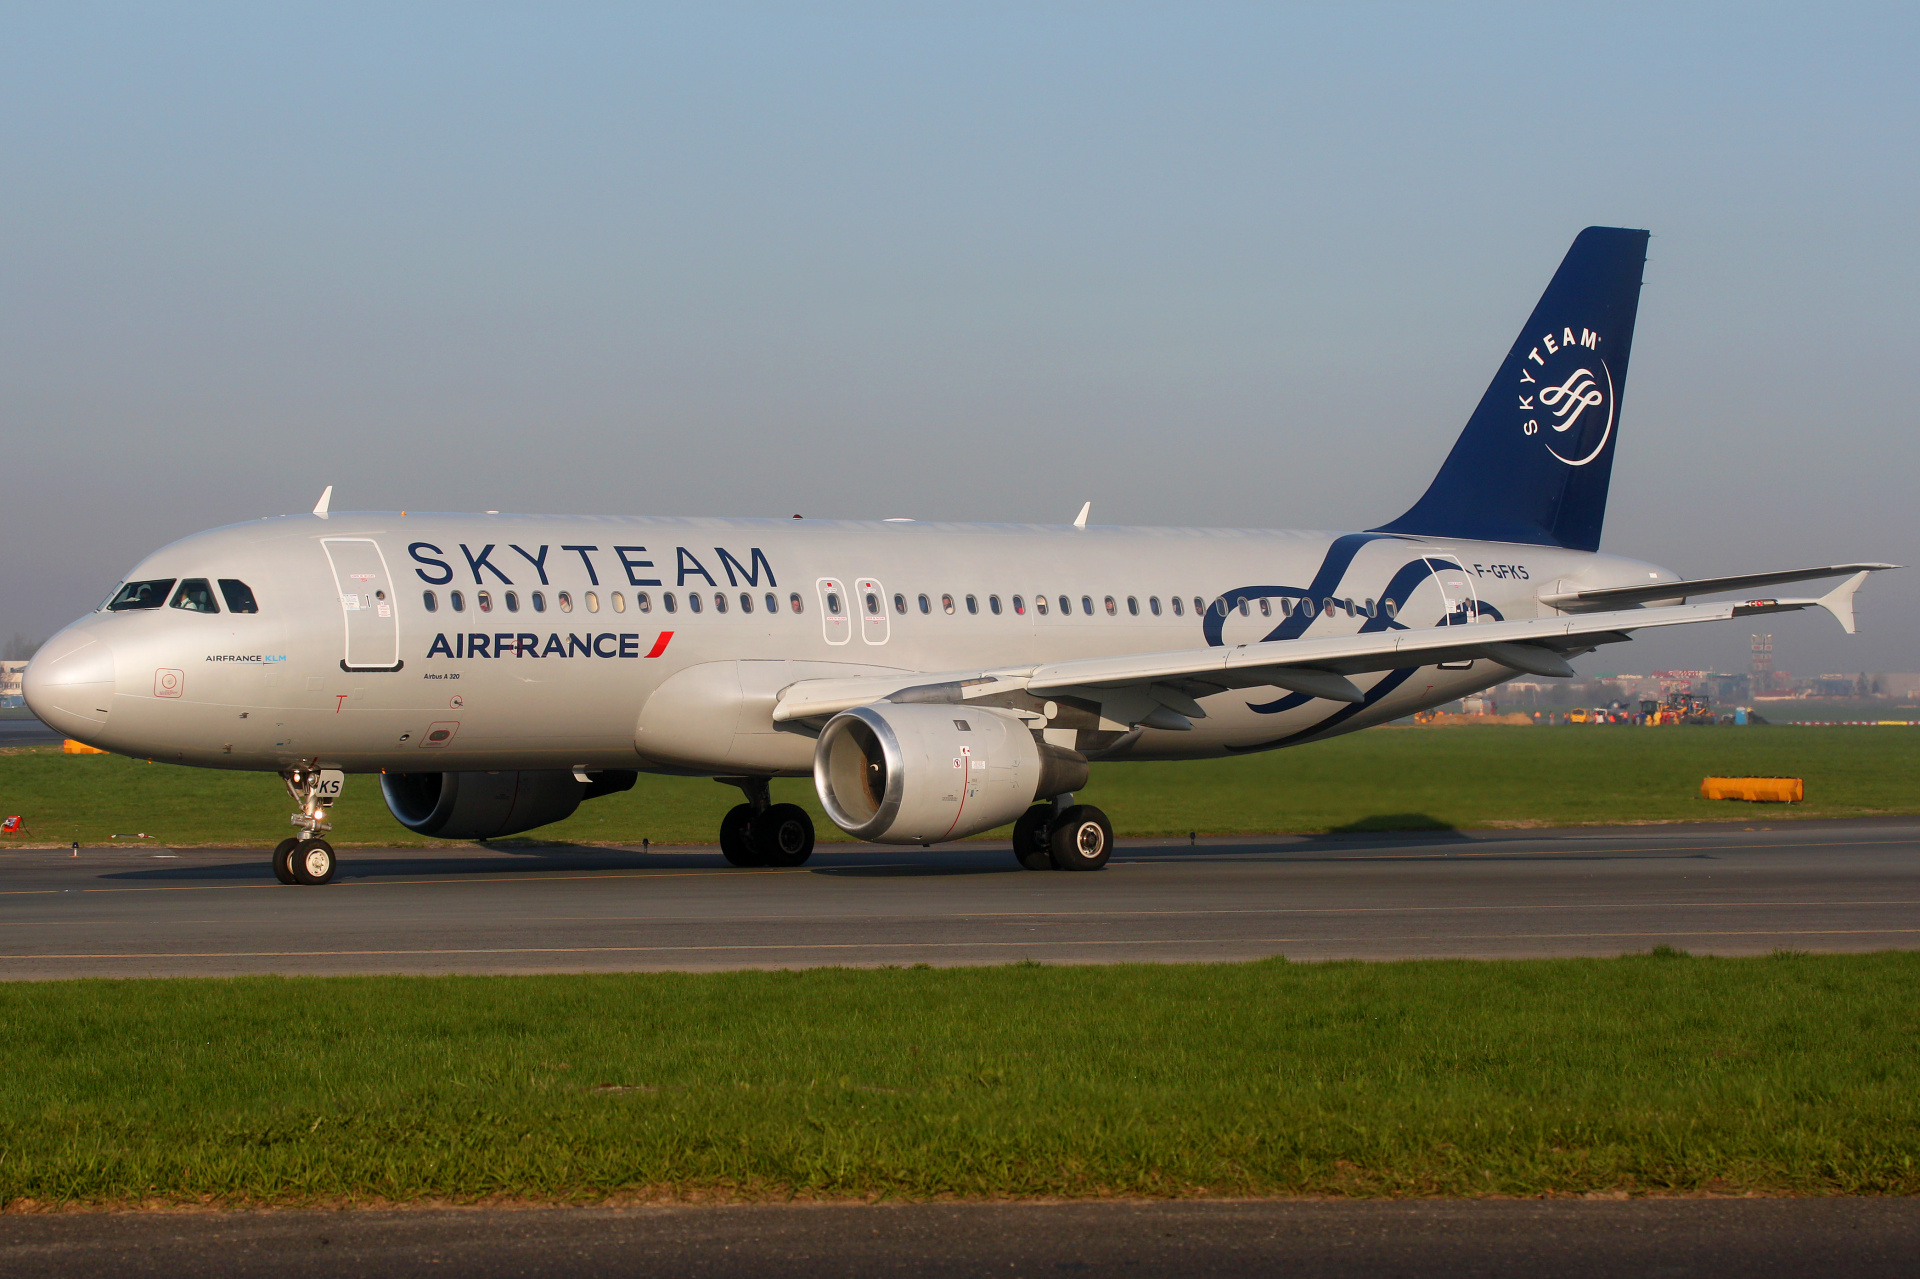 F-GFKS (SkyTeam livery) (Aircraft » EPWA Spotting » Airbus A320-200 » Air France)